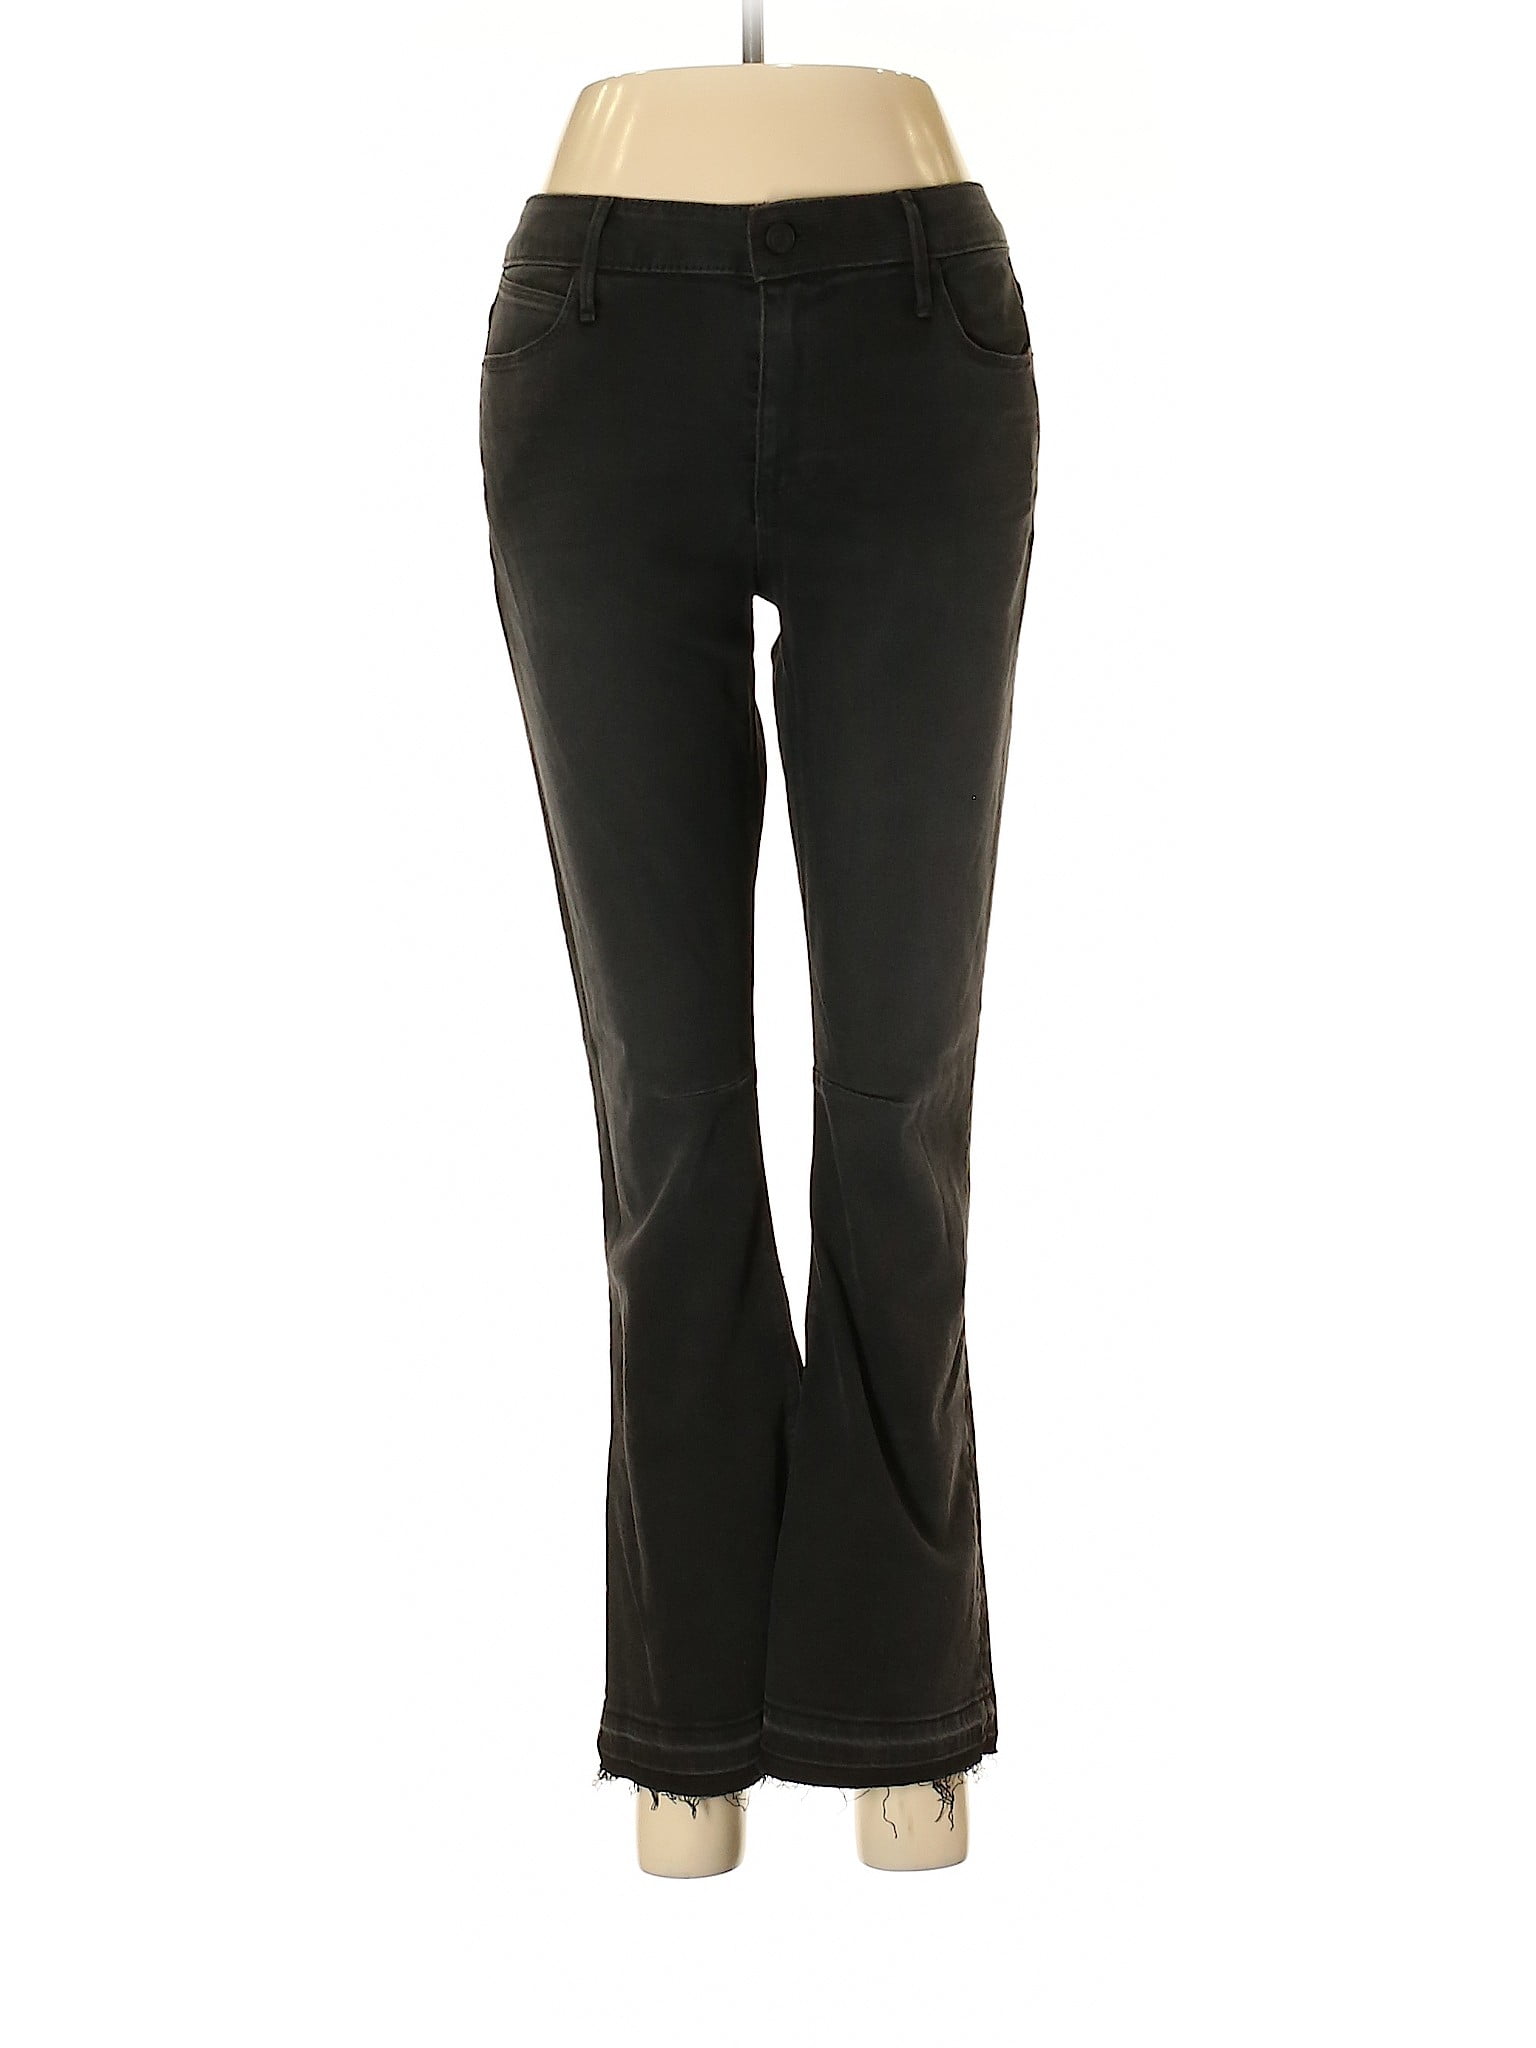 RtA Denim - Pre-Owned RtA Denim Women's Size 28W Jeans - Walmart.com ...